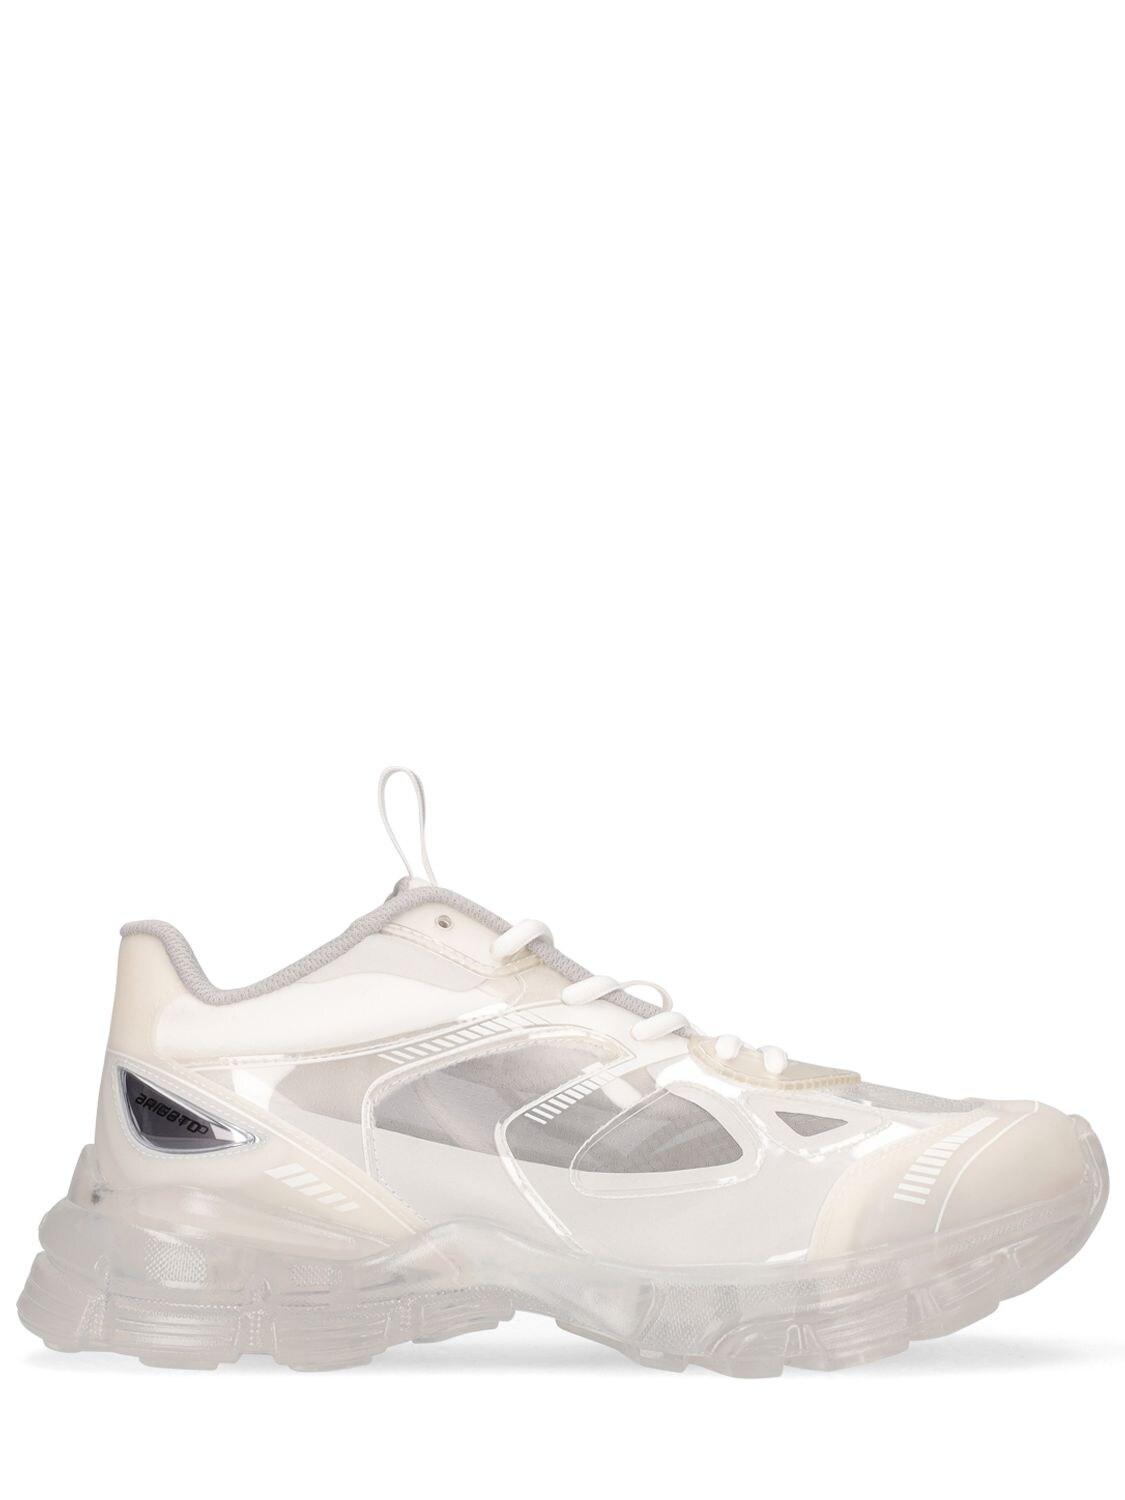 Axel Arigato Marathon Cinderella Sneakers in White | Lyst